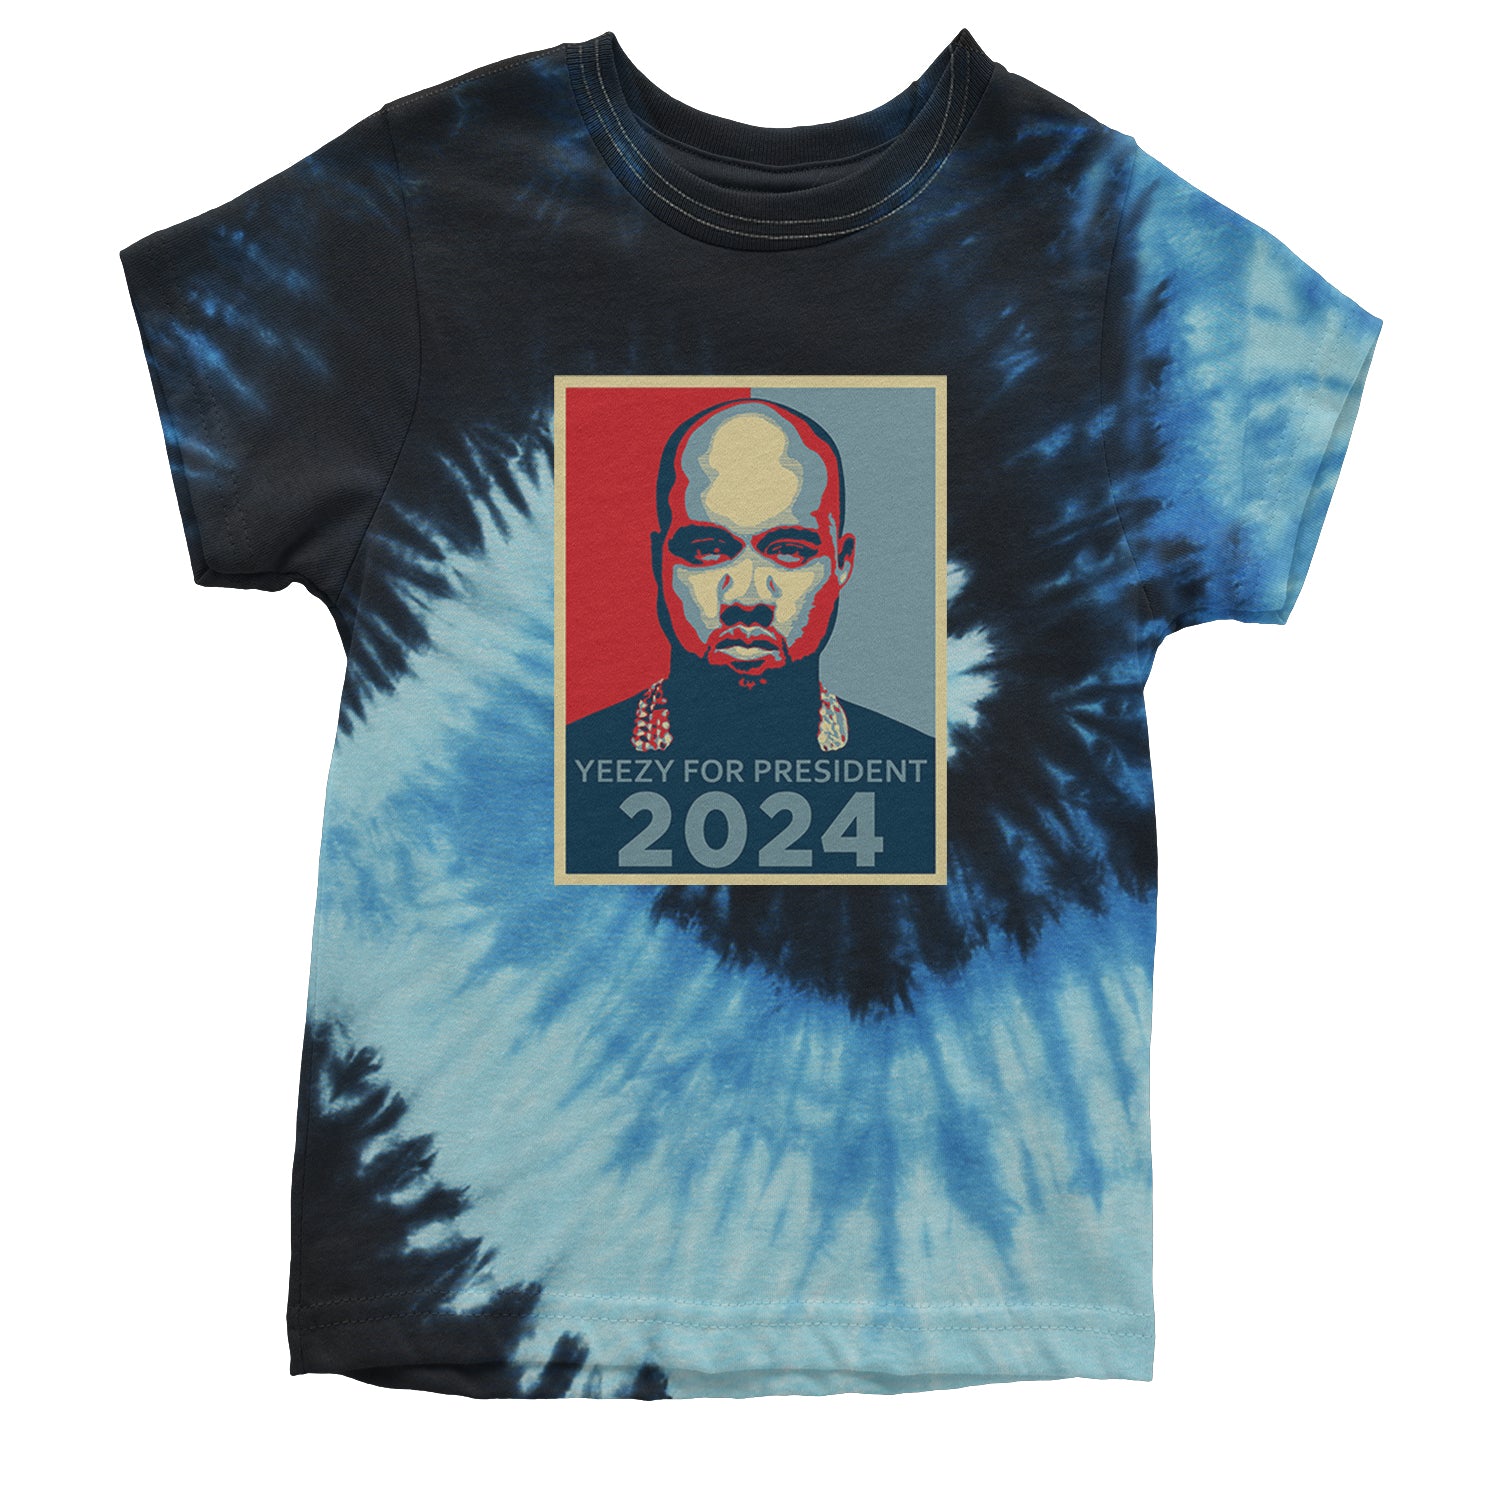 Yeezus For President Vote for Ye Youth T-shirt Tie-Dye Blue Ocean